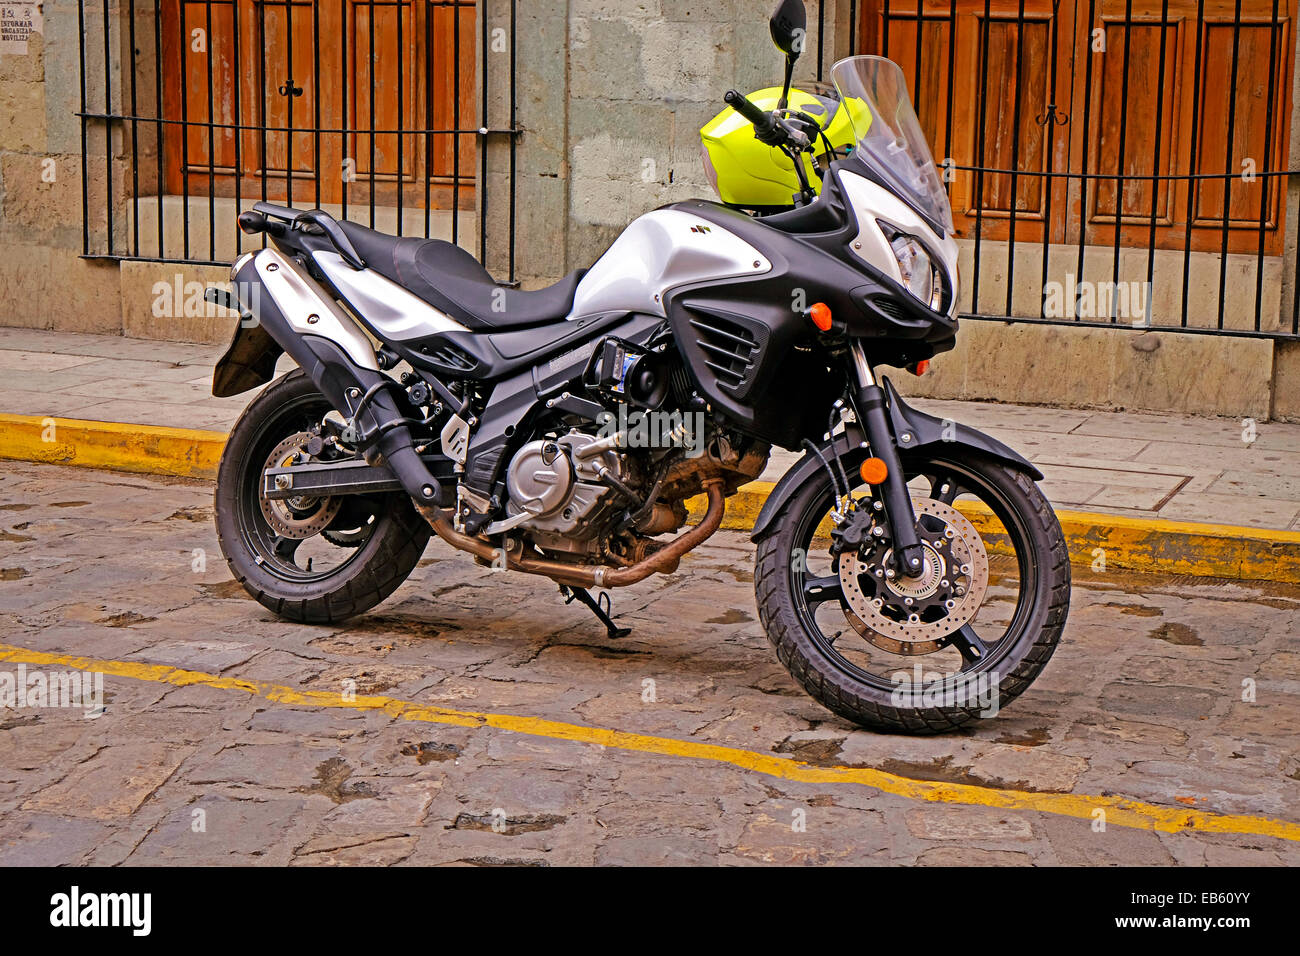 Polizia messicana Suzuki Motorcycle Foto Stock